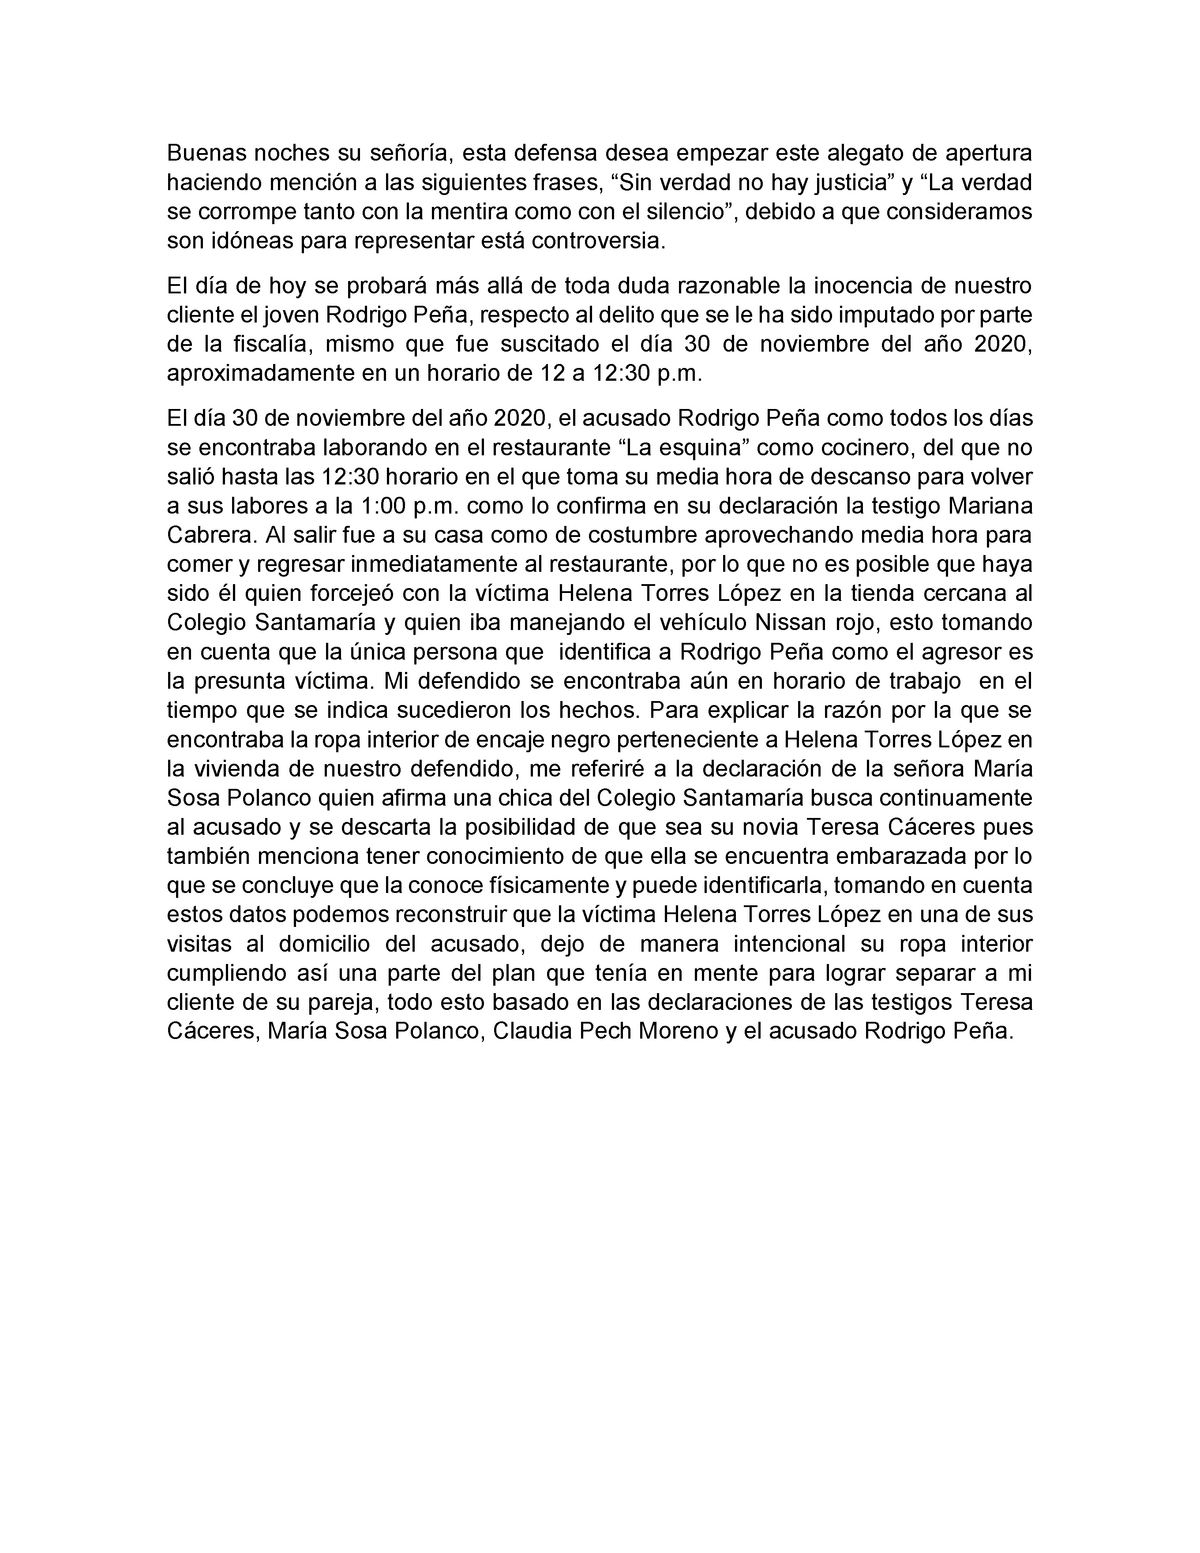 Ejemplo de Alegato de apertura en materia Penal - Derecho penal - UADY -  Studocu